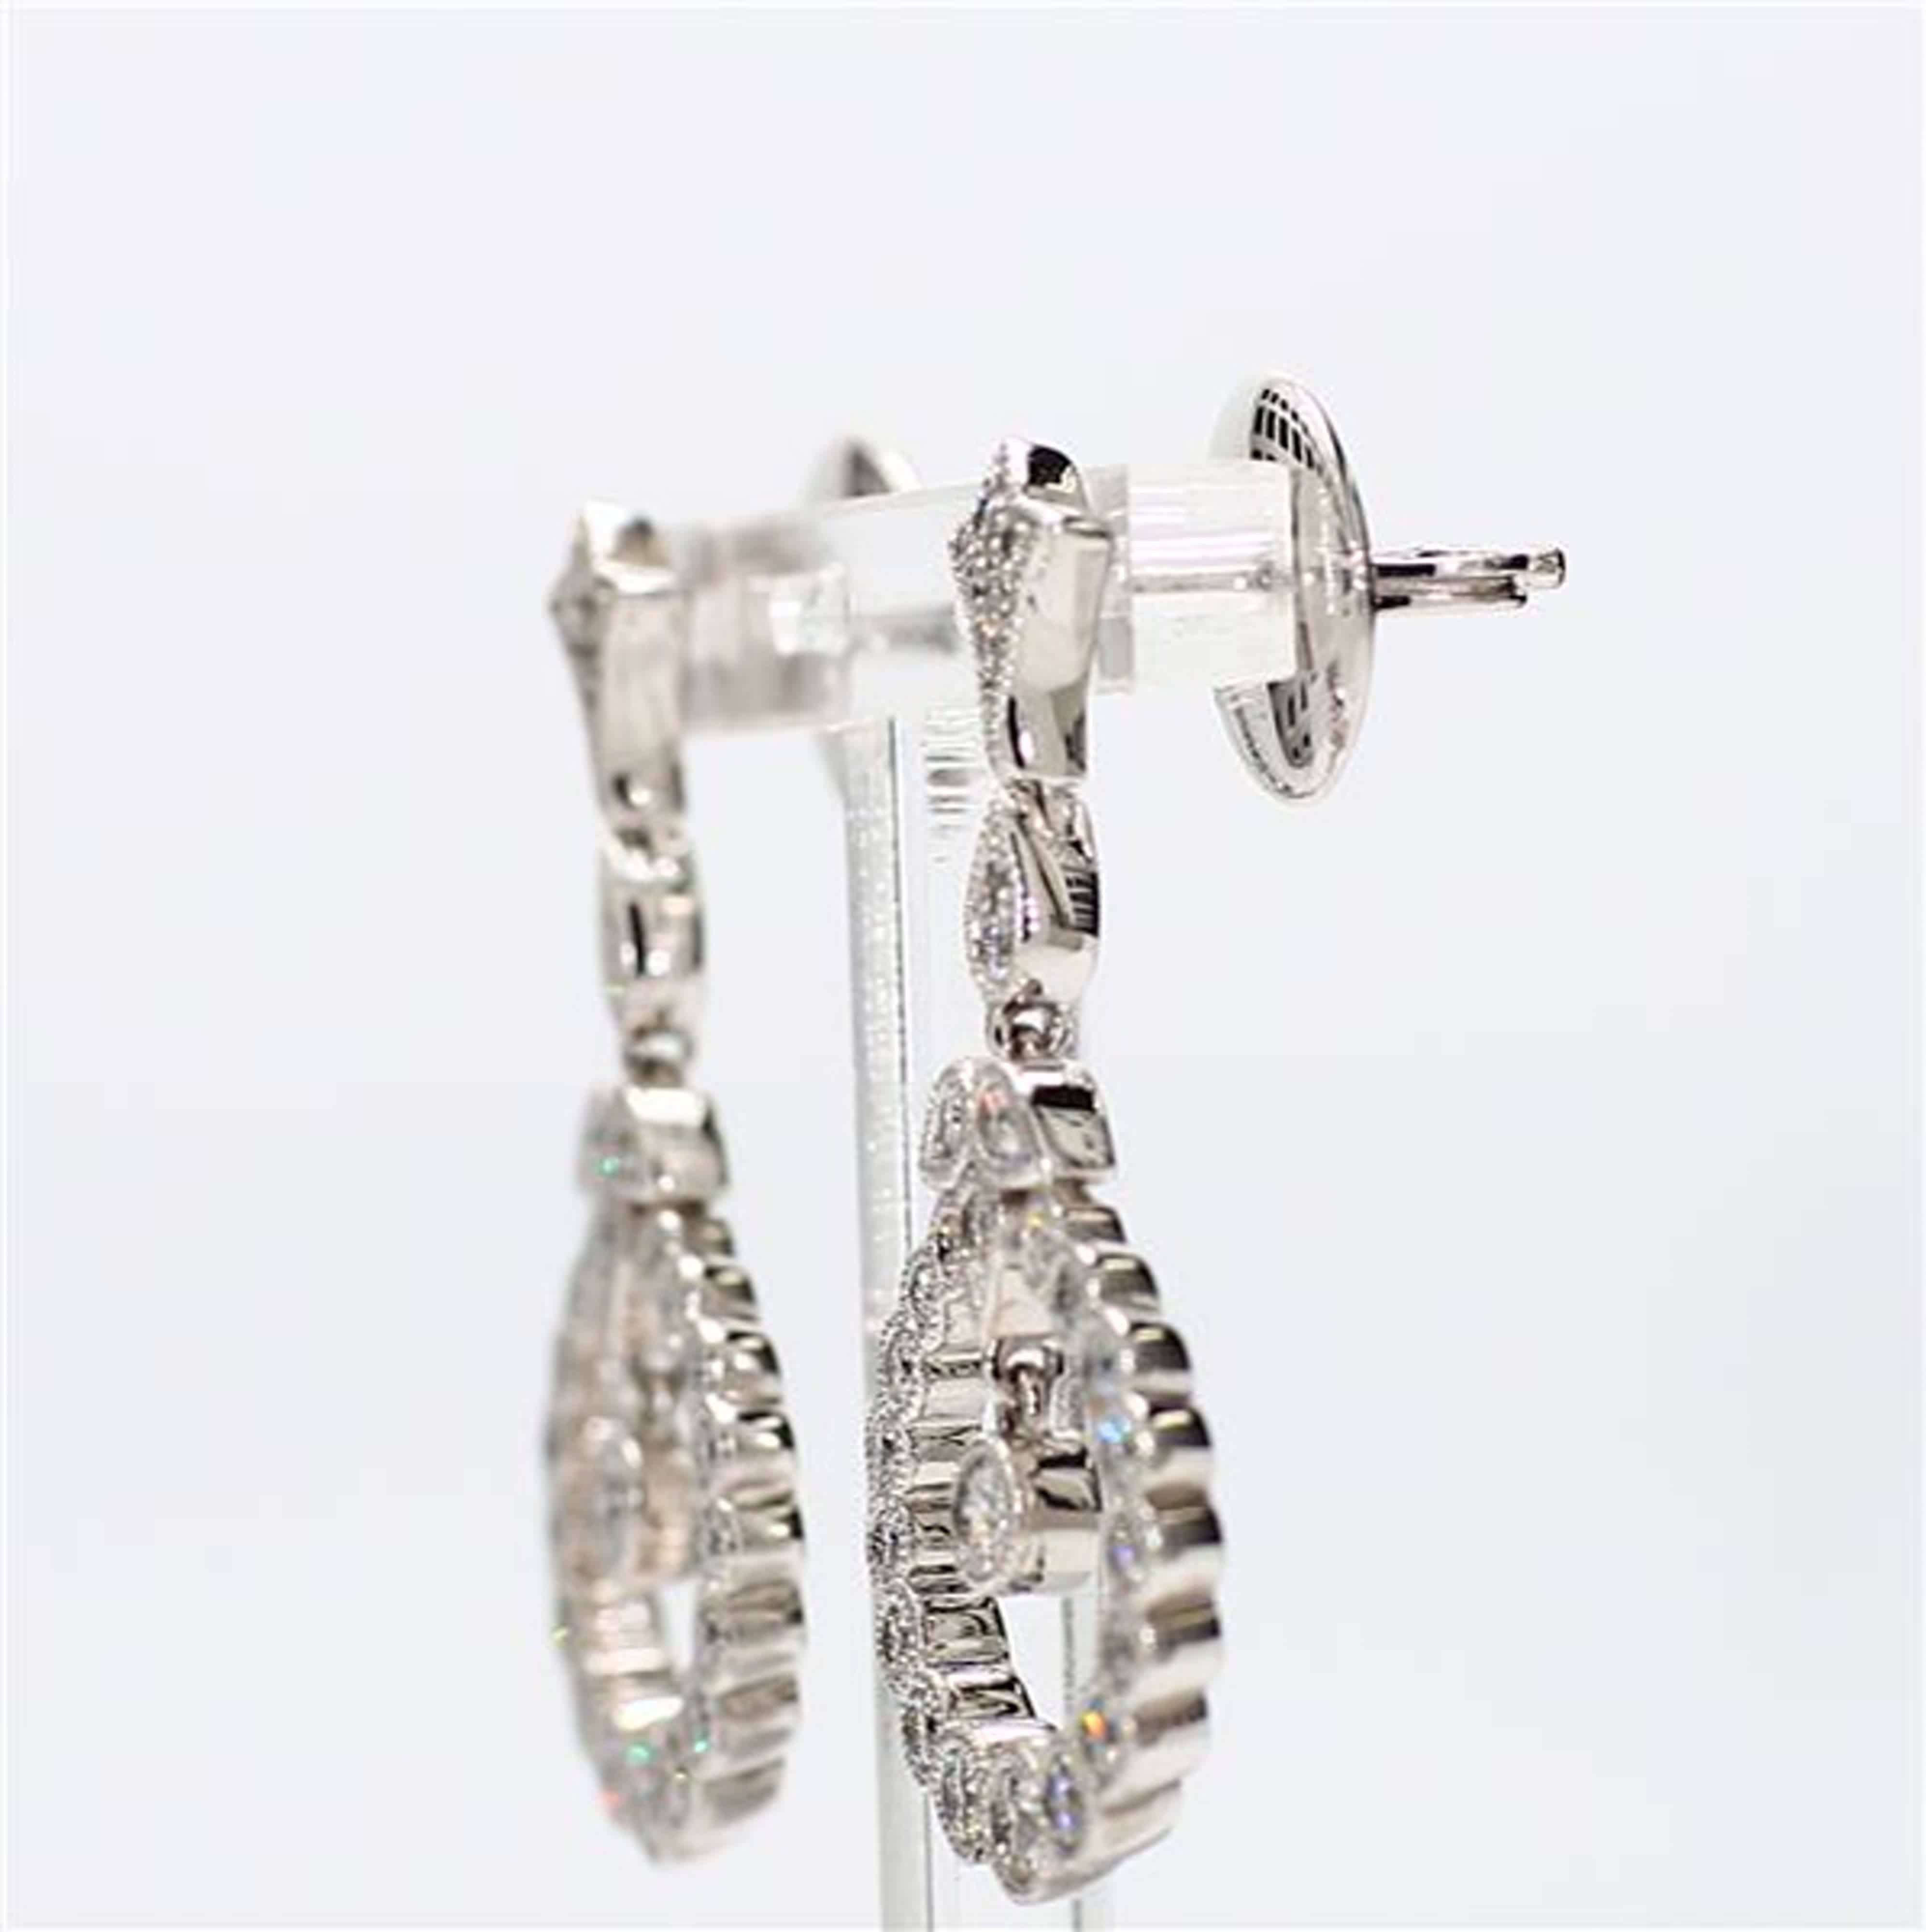 Natural White Round Diamond 1.12 Carat TW White Gold Drop Earrings